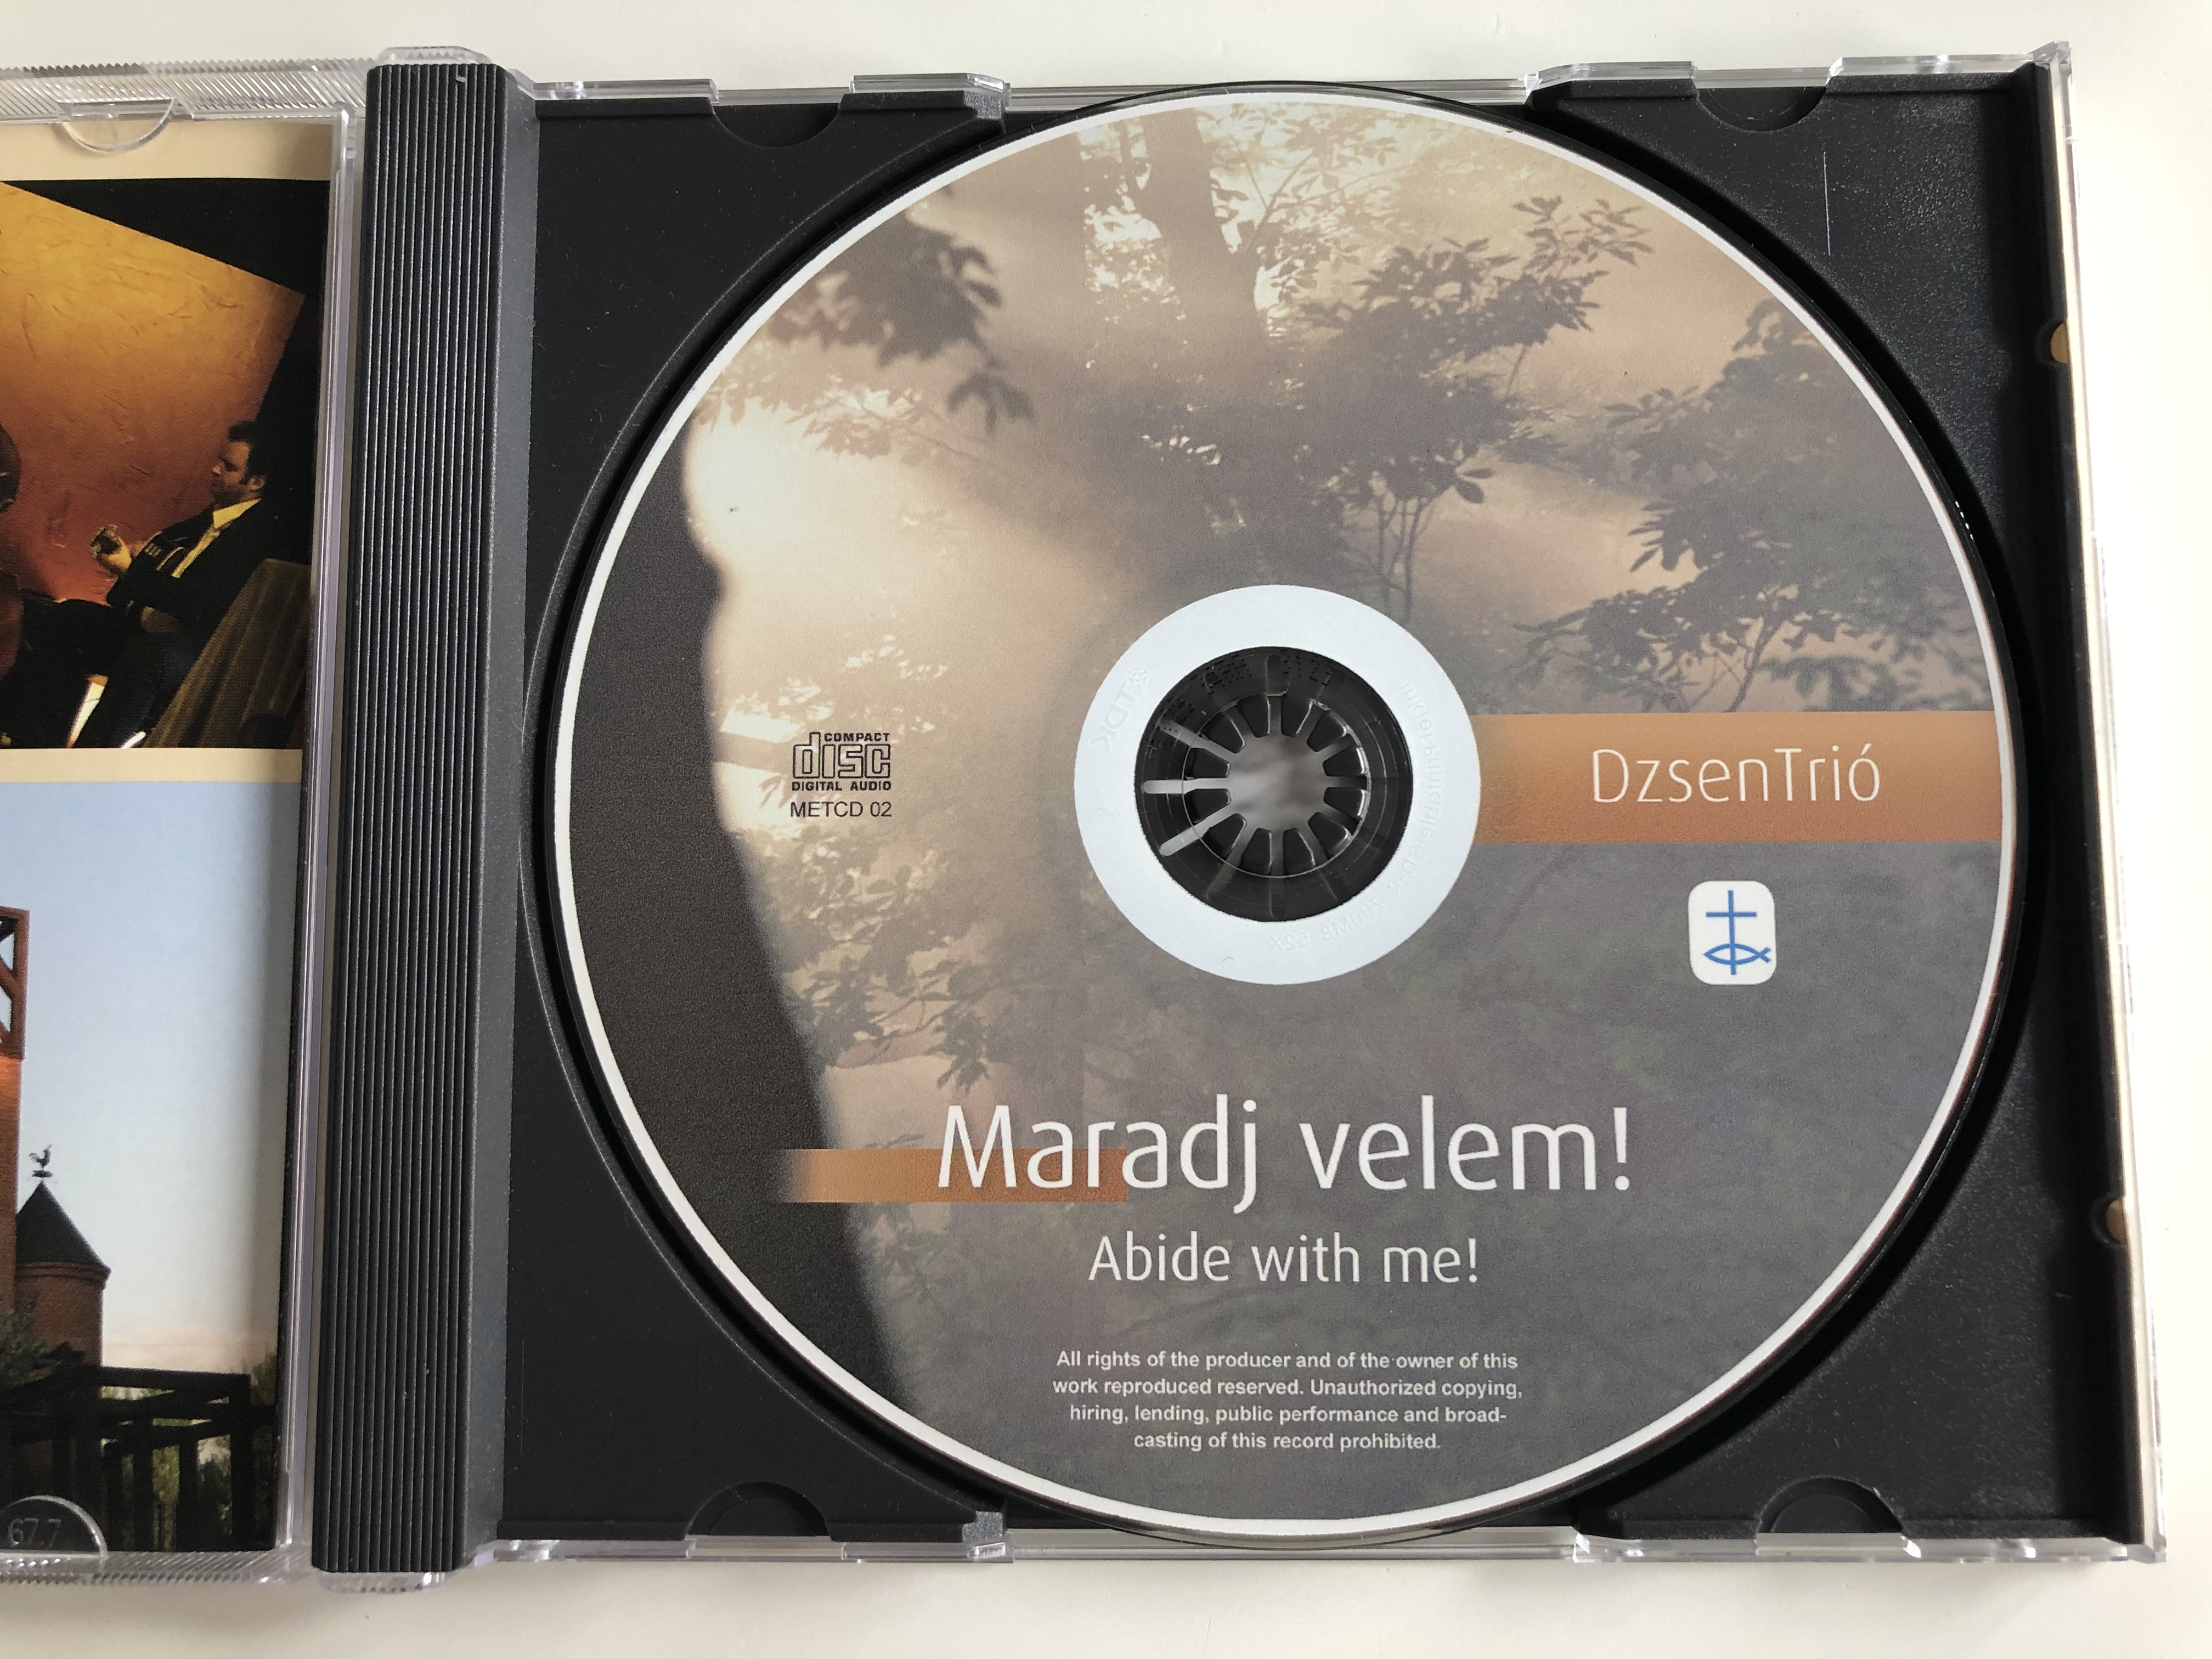 maradj-velem-abide-with-me-dzsentrio-audio-cd-2011-metcd-02-4-.jpg